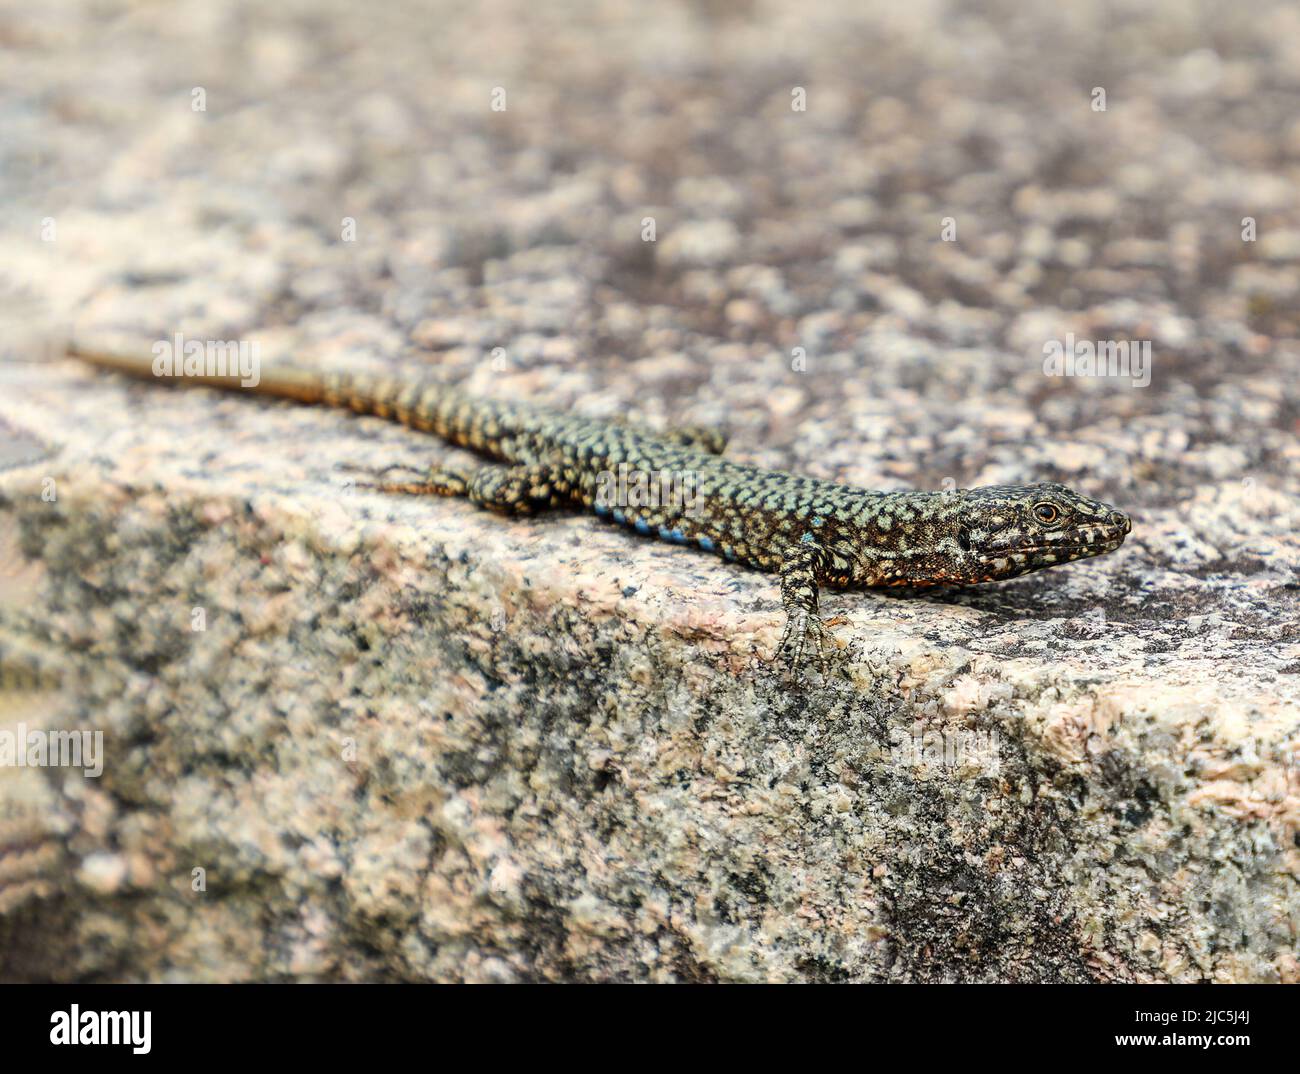 A common wall lizard (Podarcis muralis) basking on a wall Stock Photo